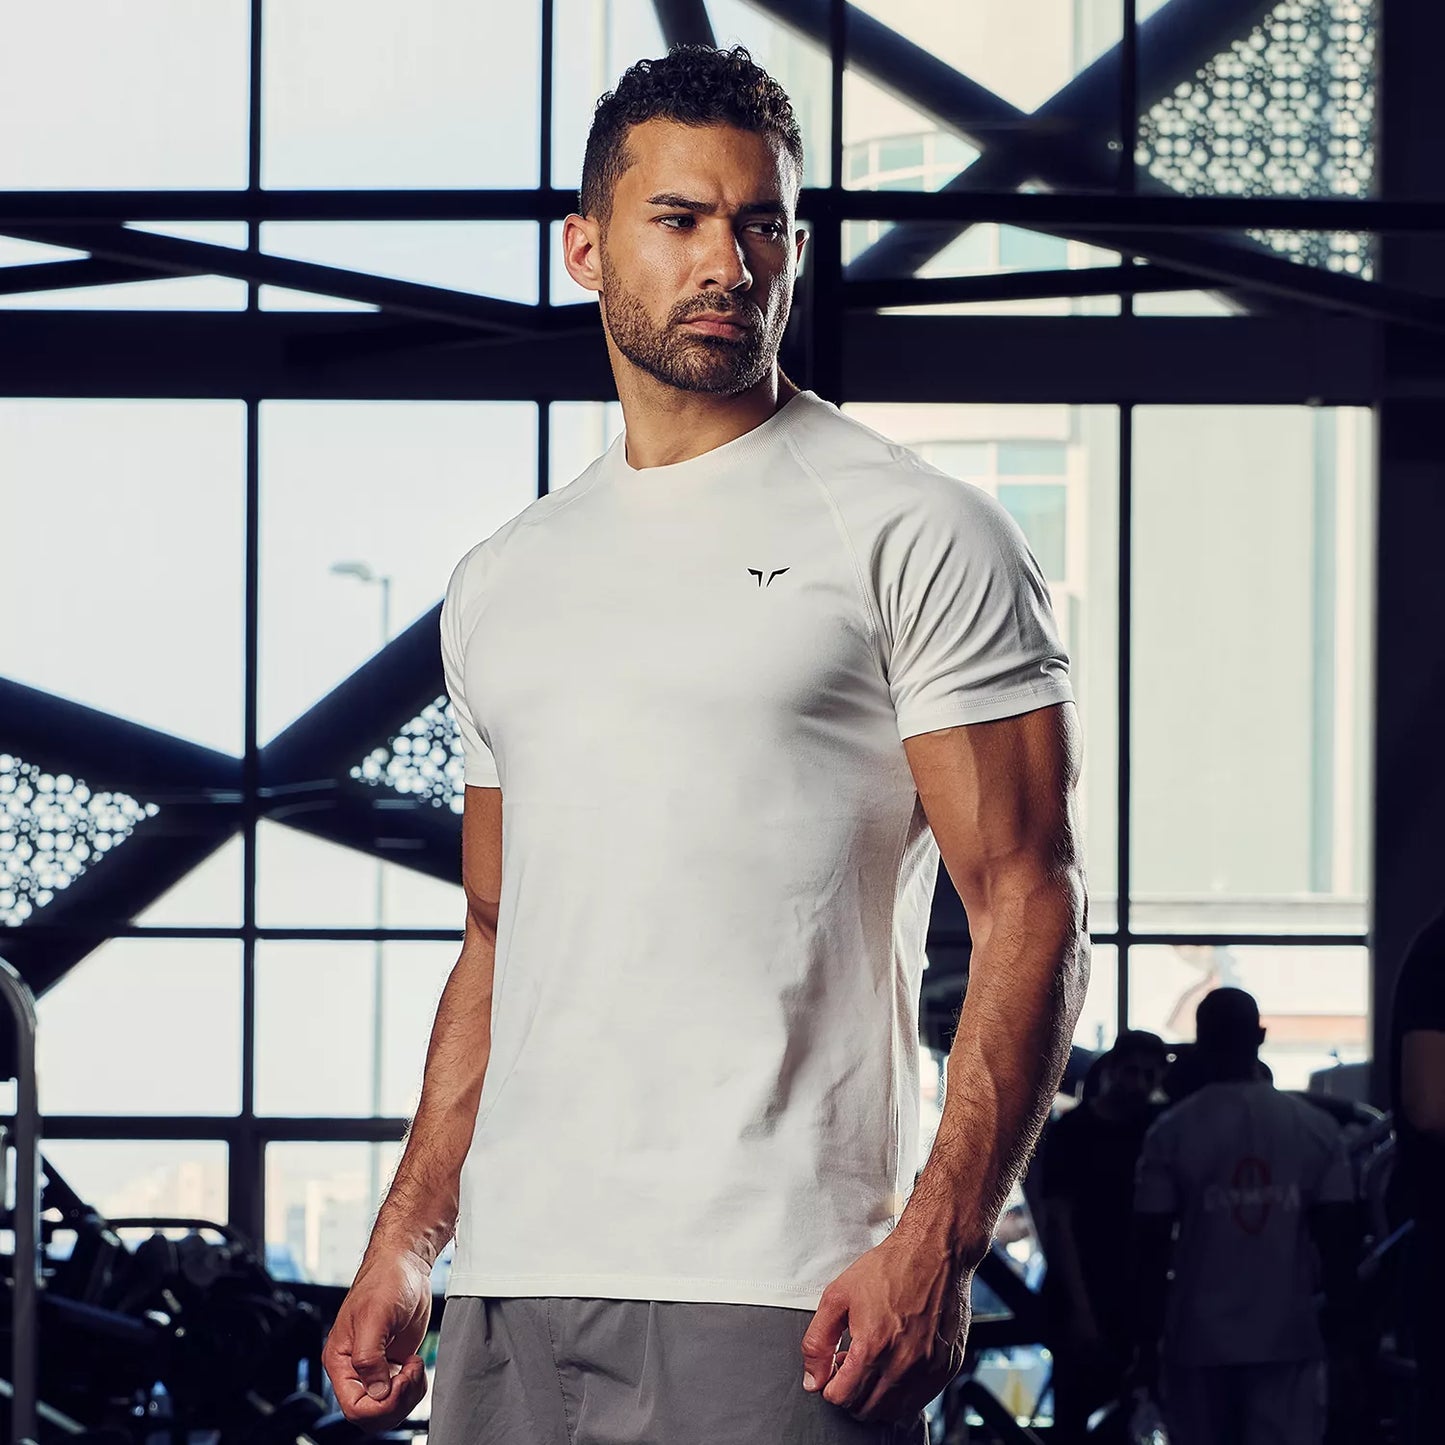 squatwolf-gym-wear-golden-era-raglan-muscle-tee-pearl-white-workout-shirts-for-men